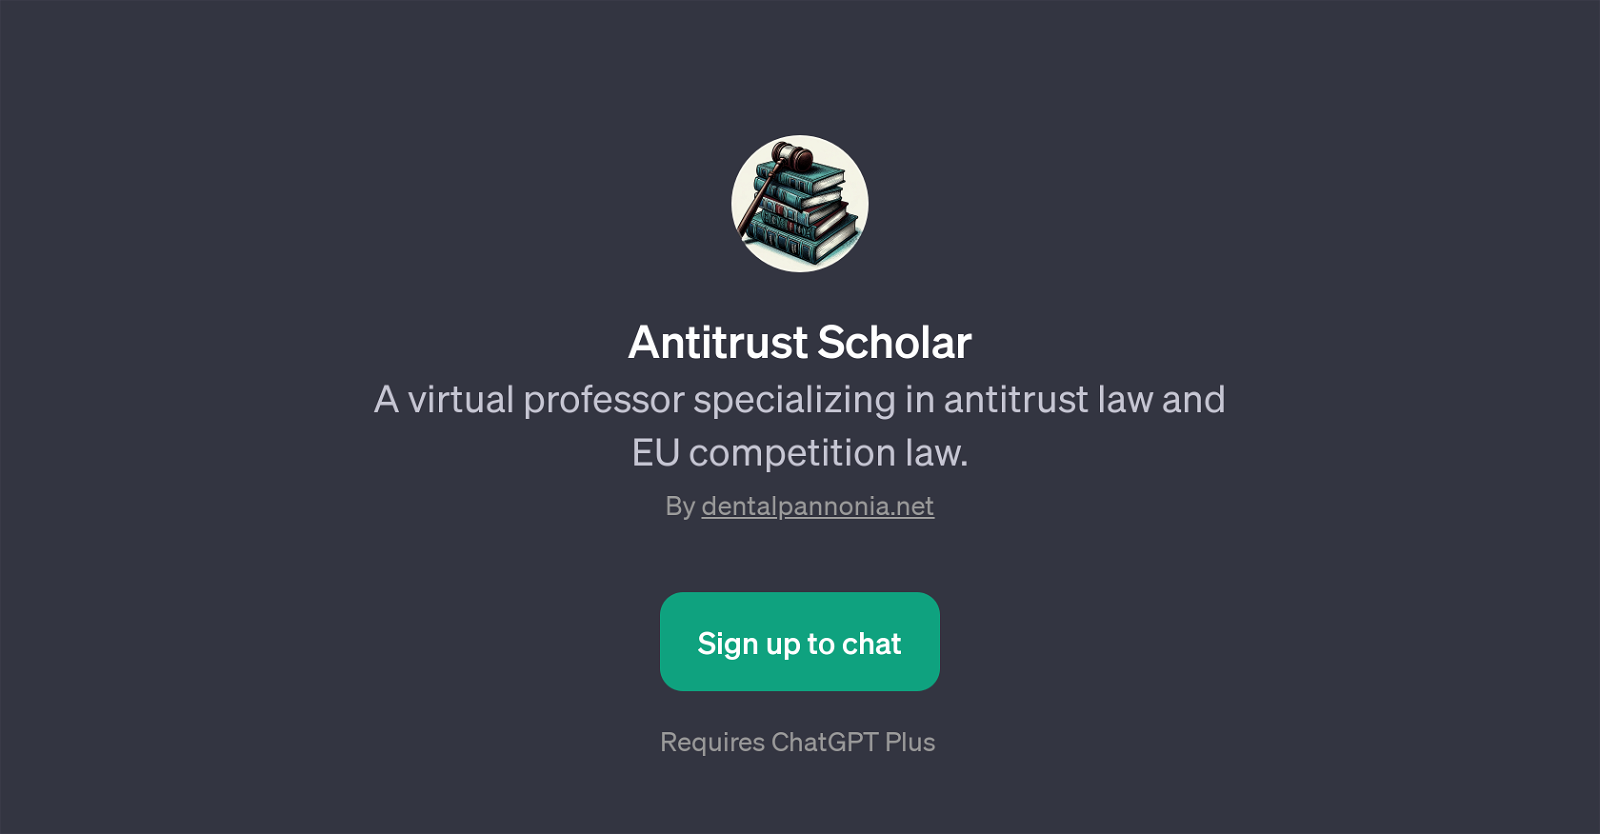 Antitrust Scholar website